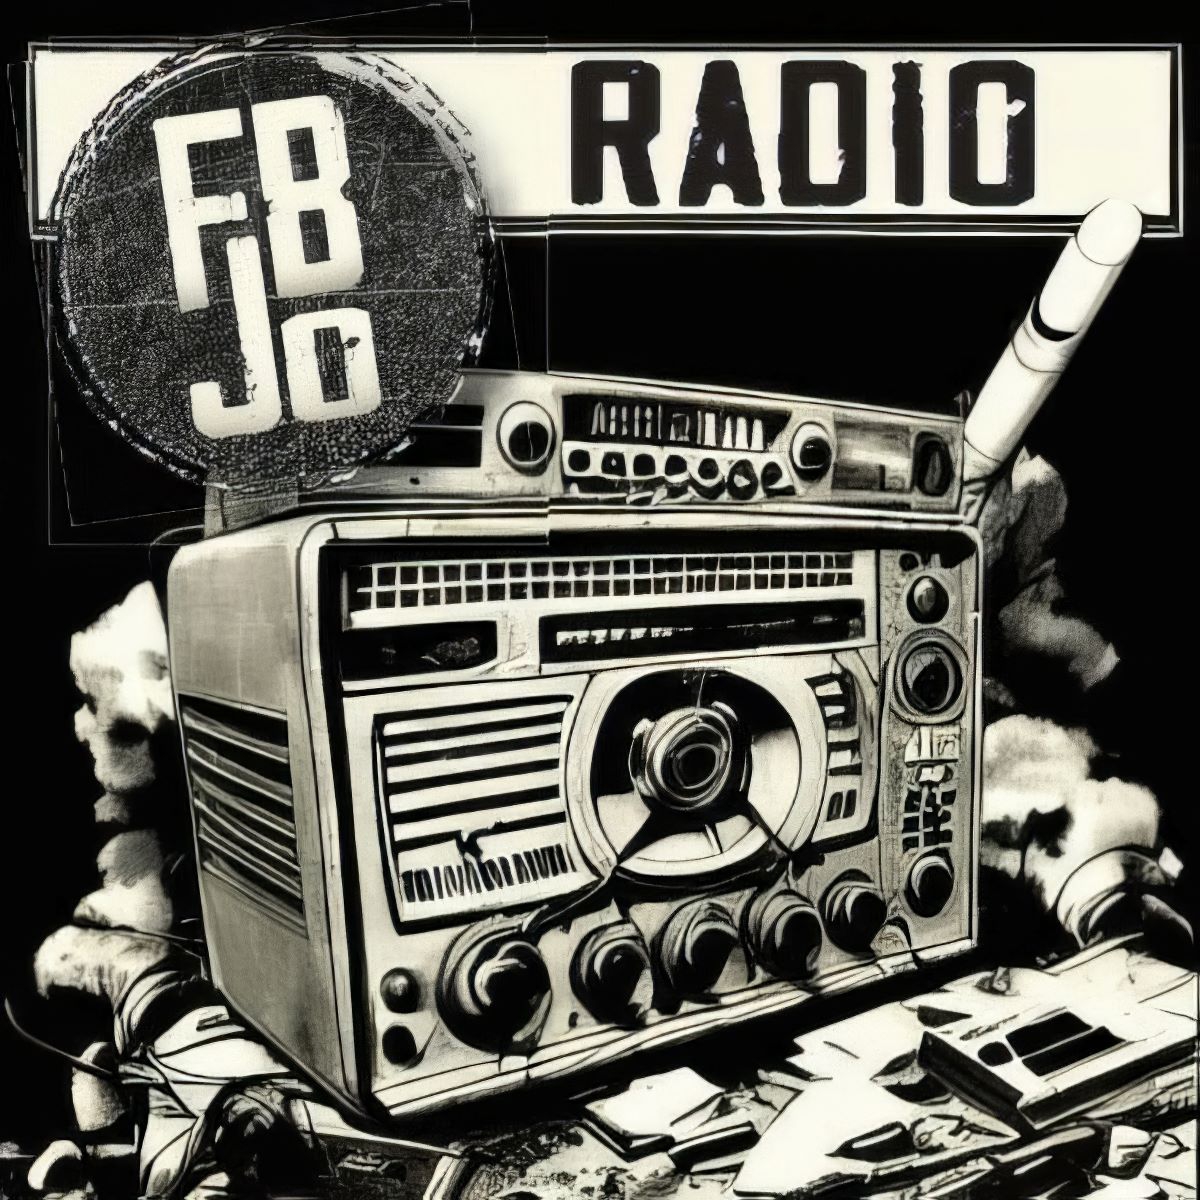 FBJO - “Radio”